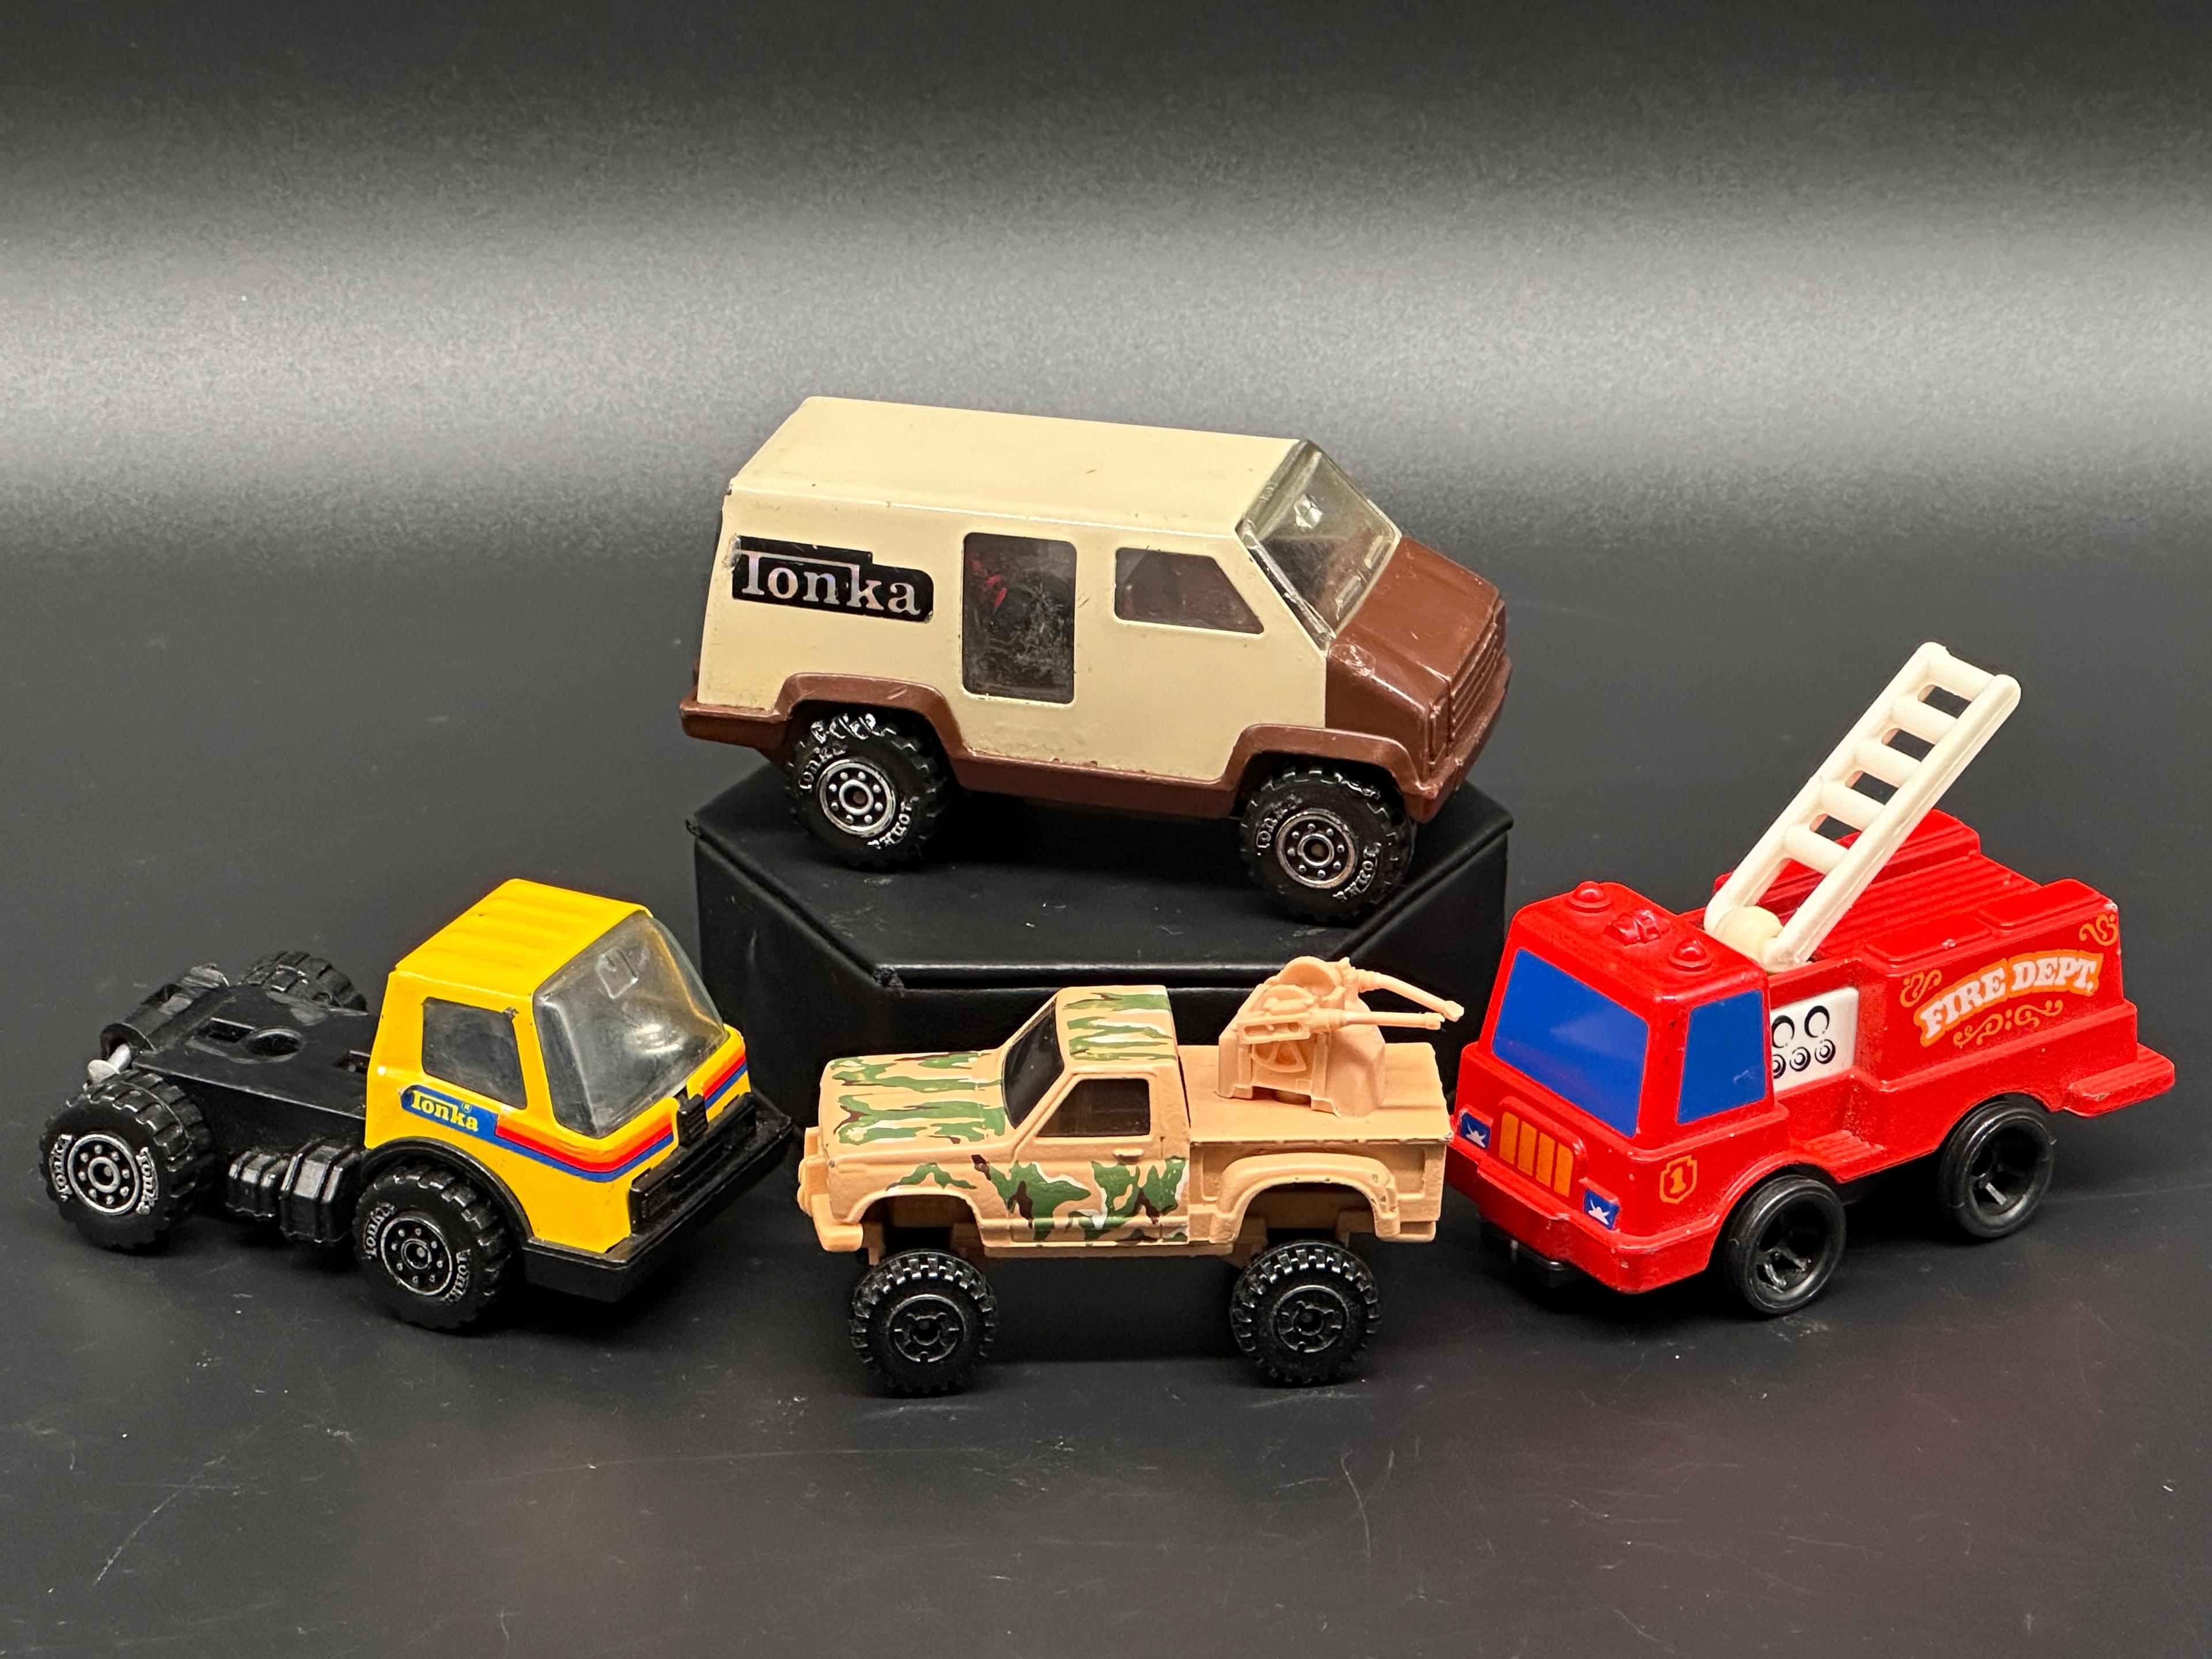 Misc. Vintage Toy Vehicles